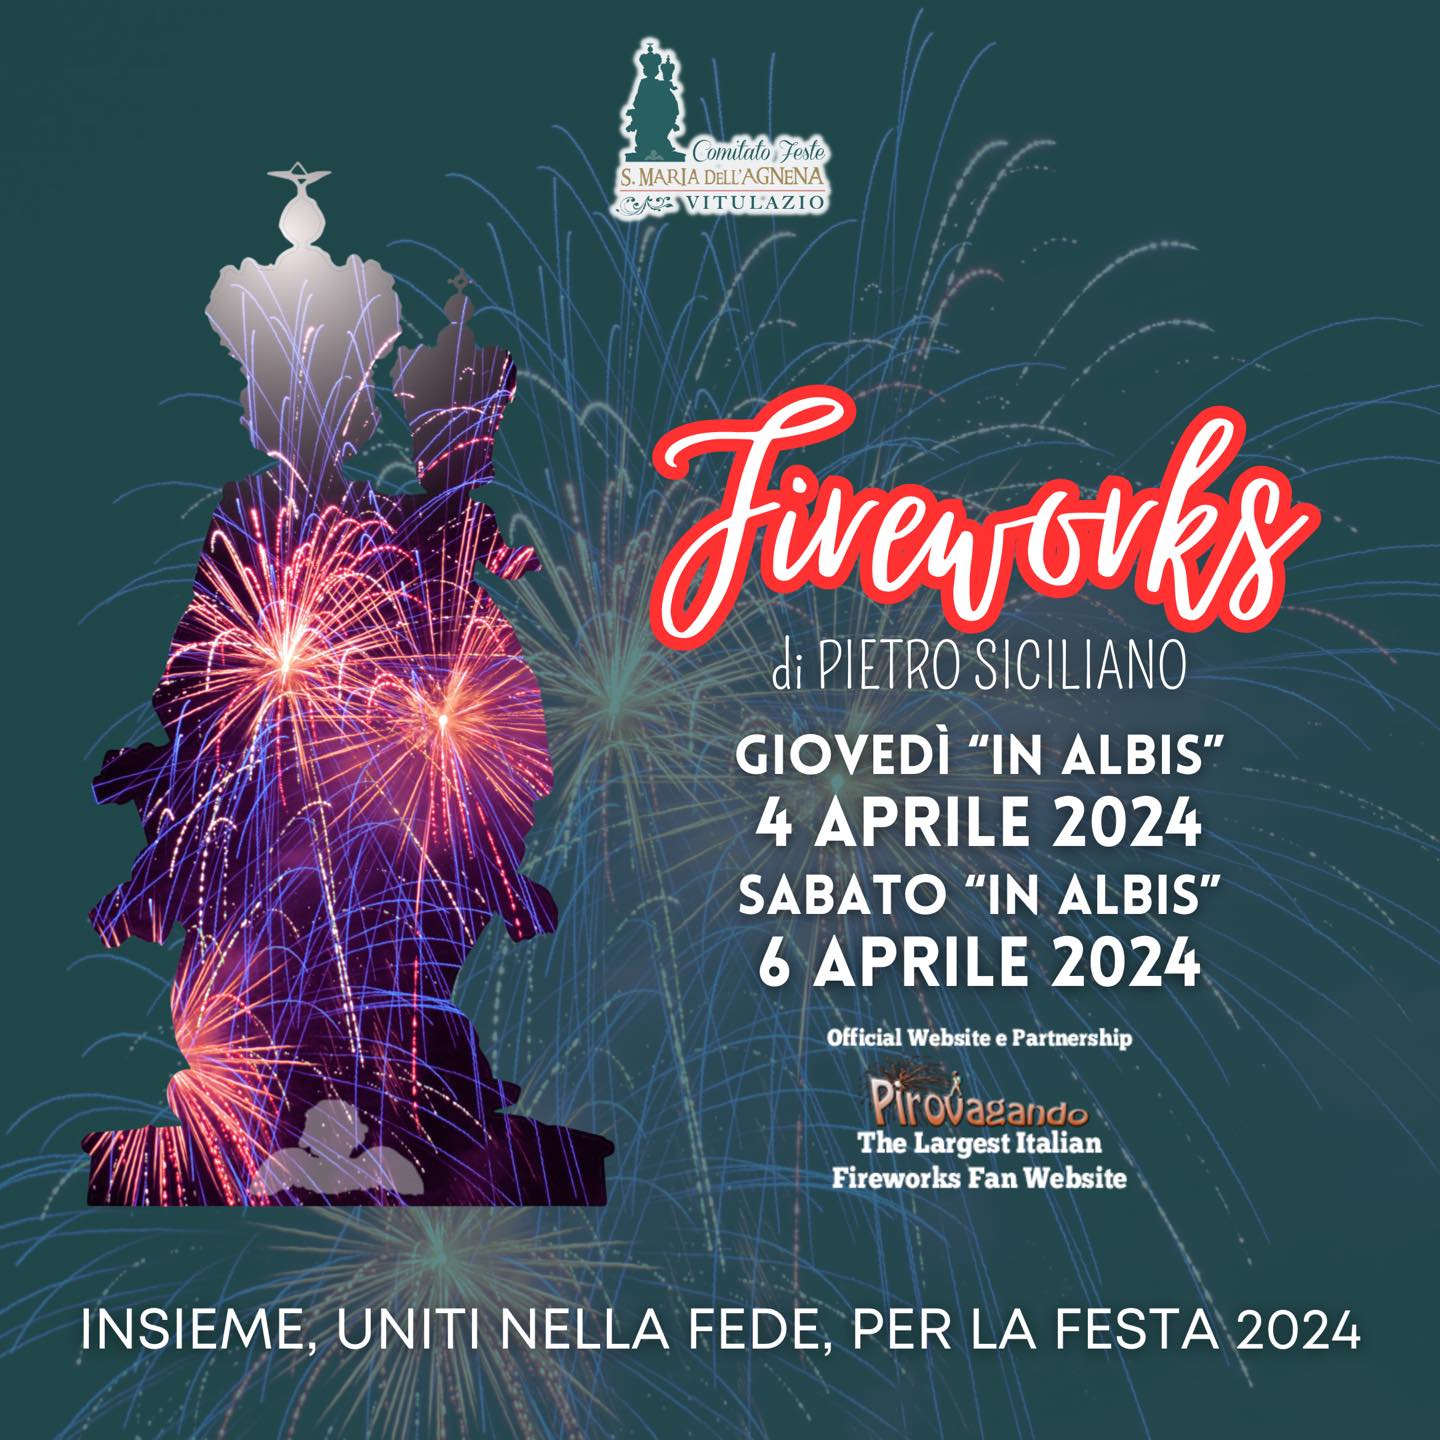 Fireworks_vitulazio_2024 (1).jpg